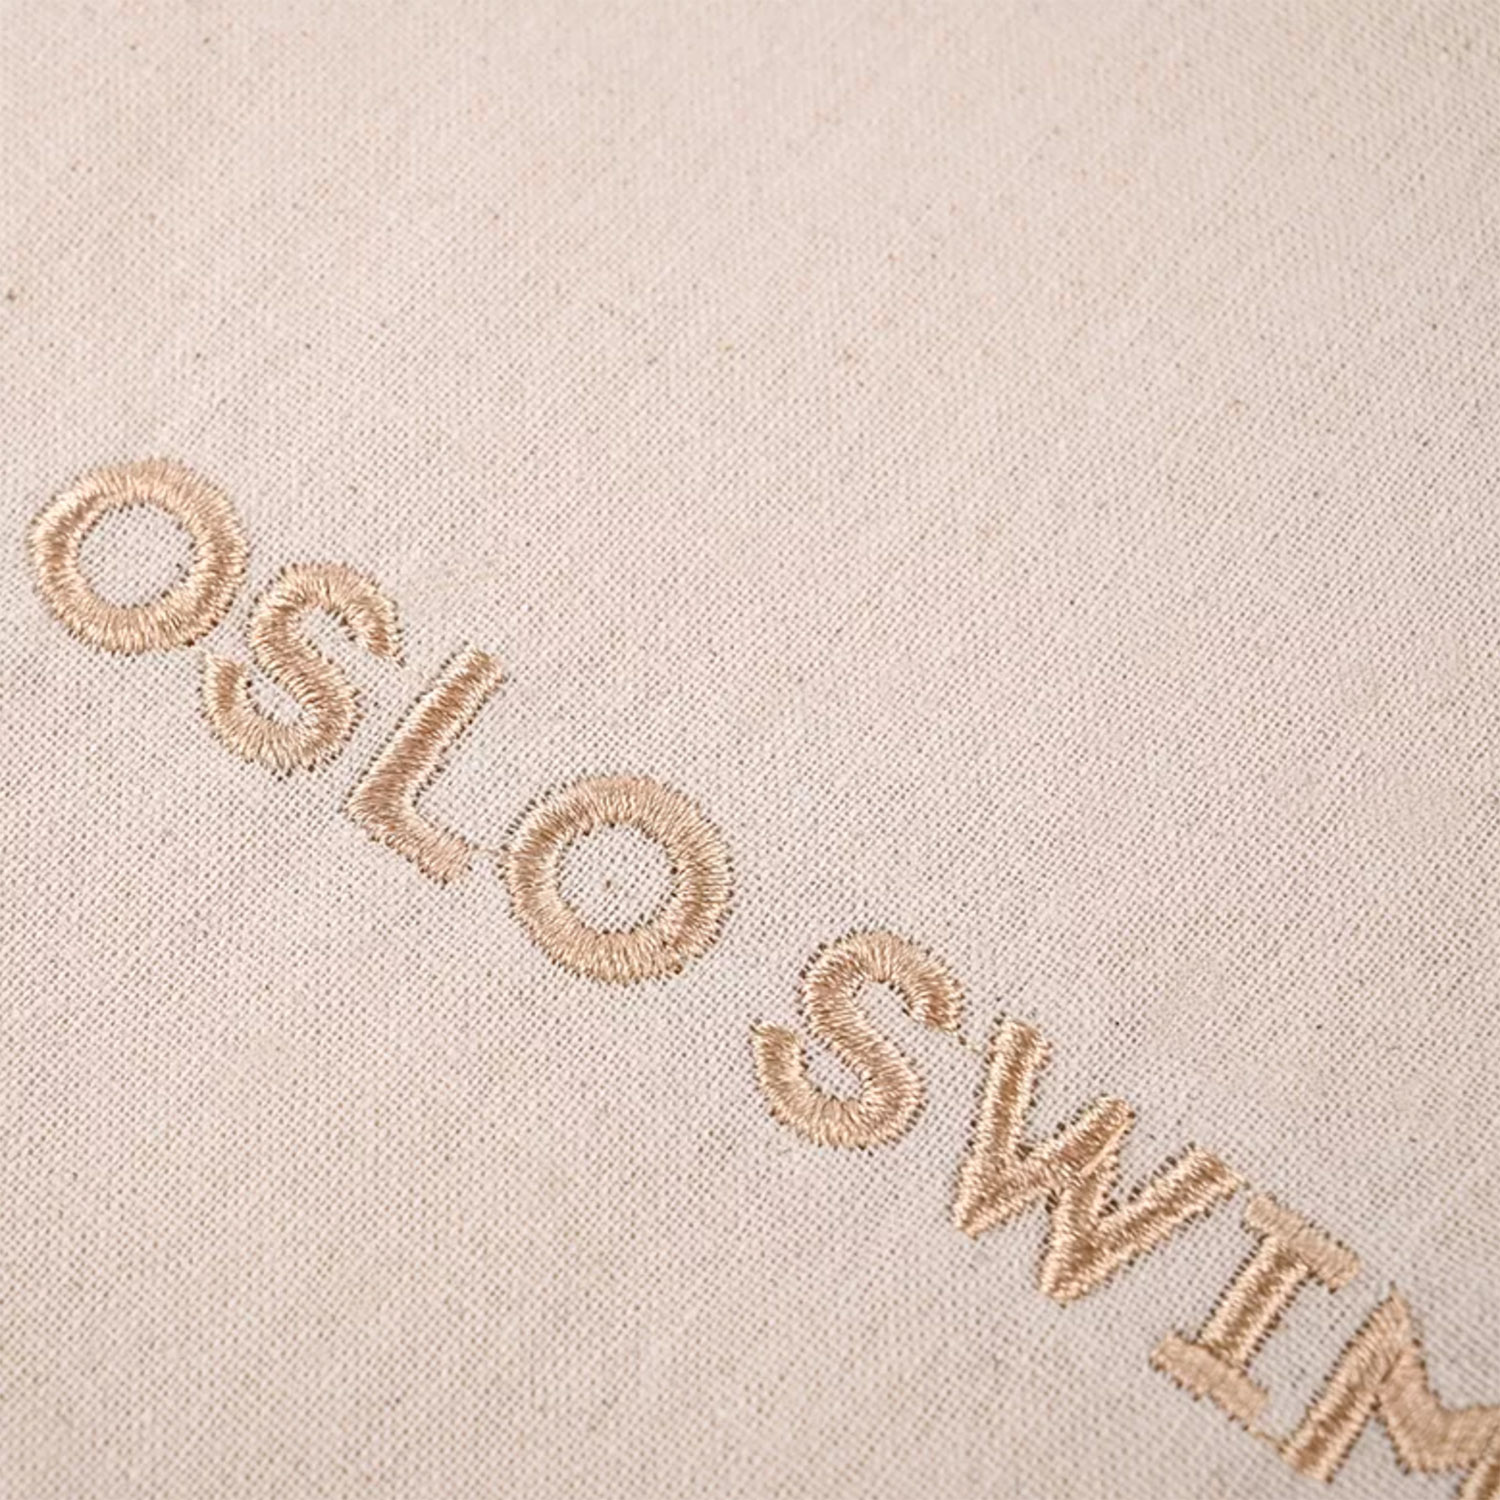 Custom embroidery on linen fabric